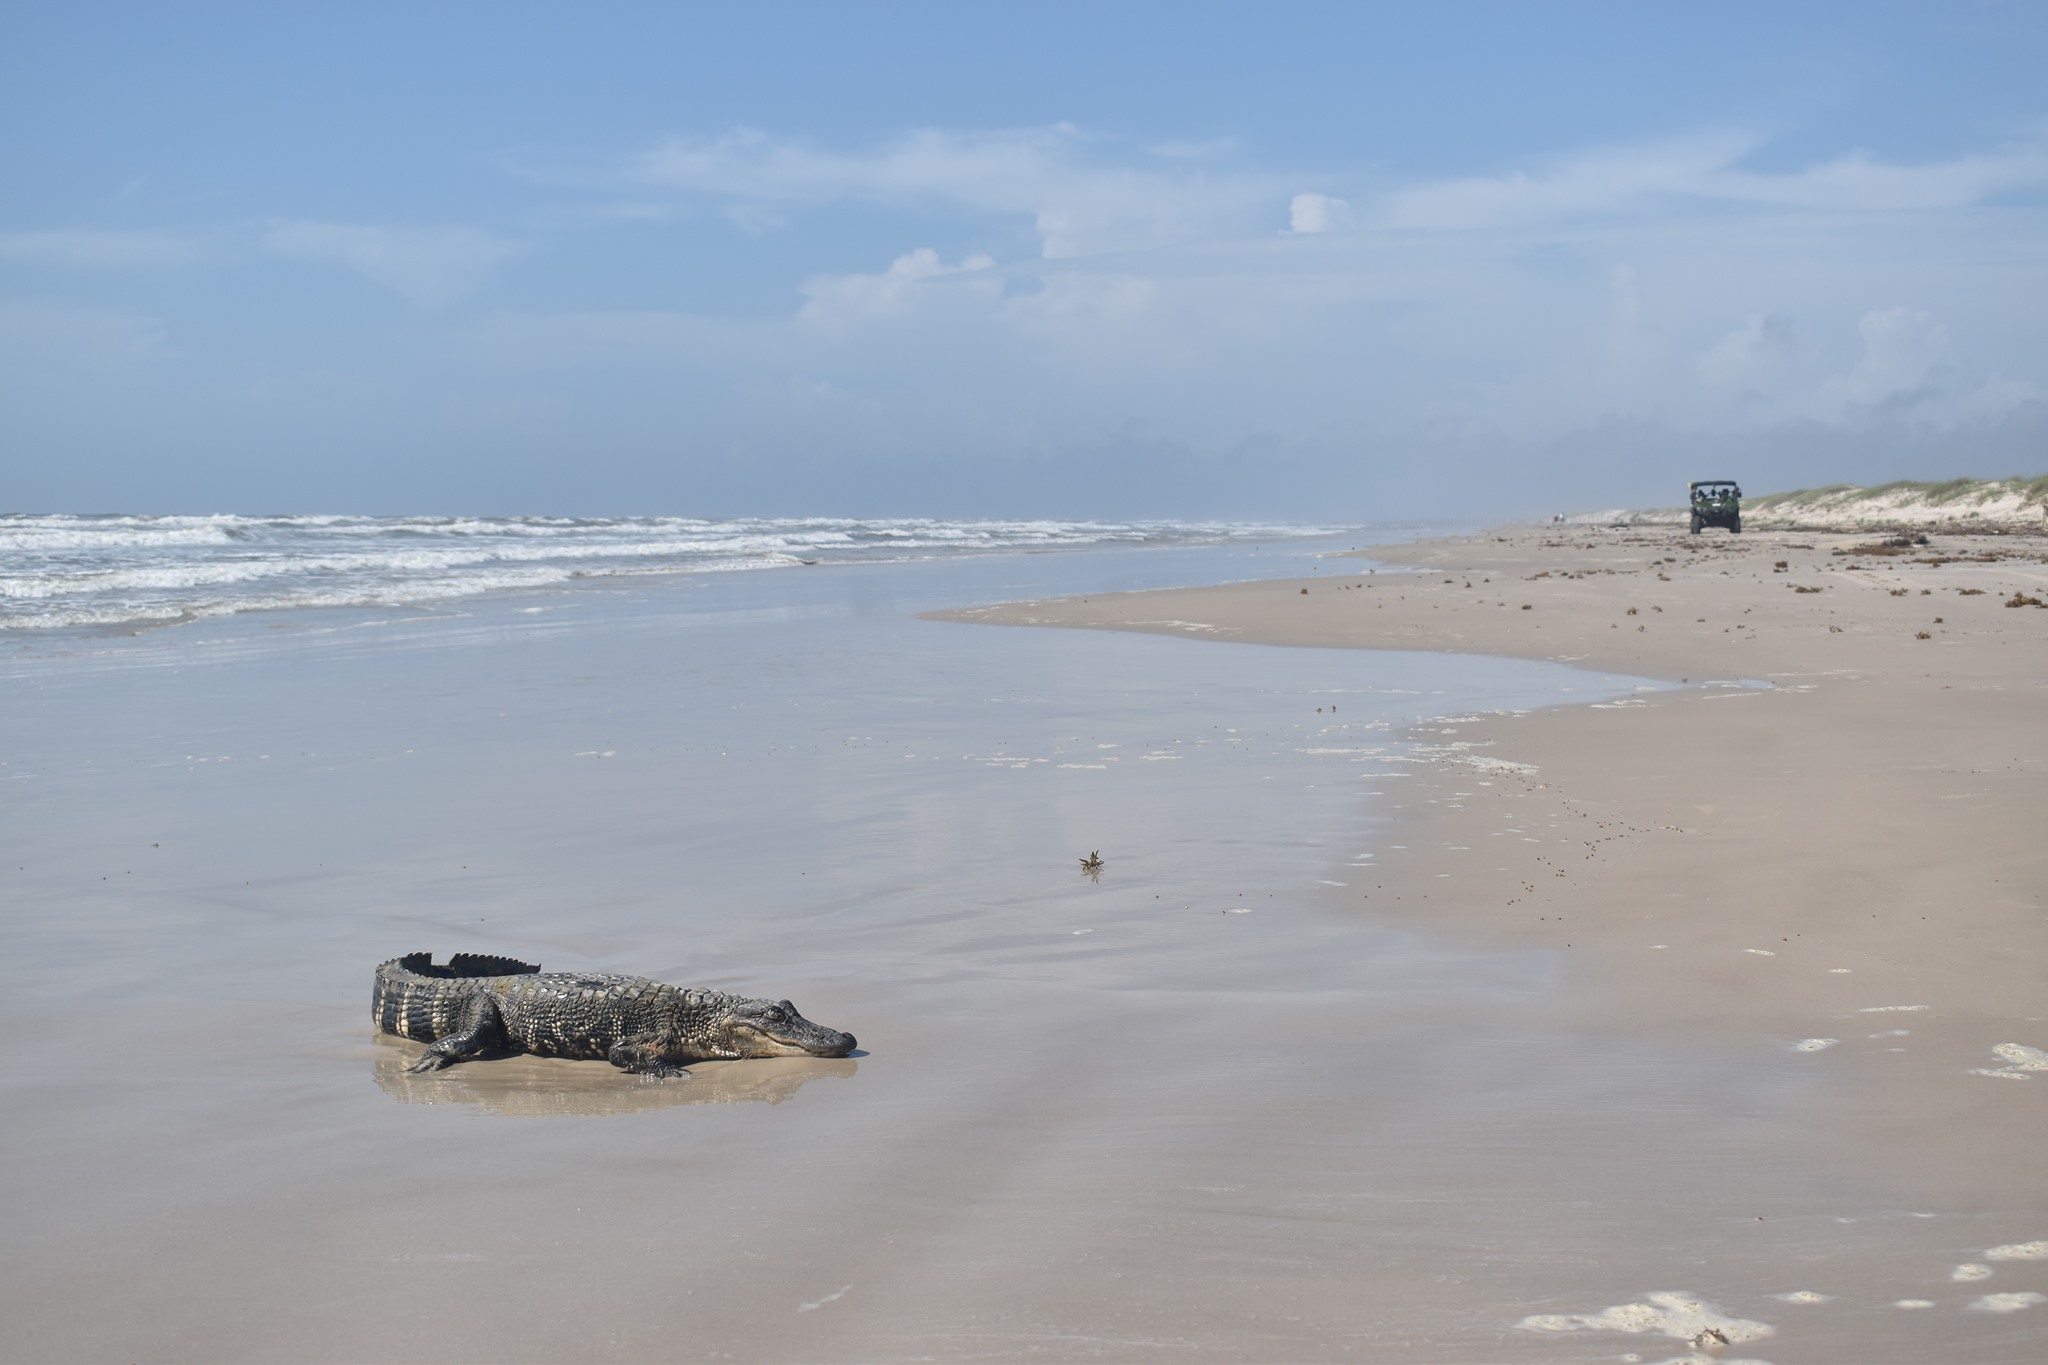 Hallan caimán de Louisiana en Padre Island – Telemundo Houston